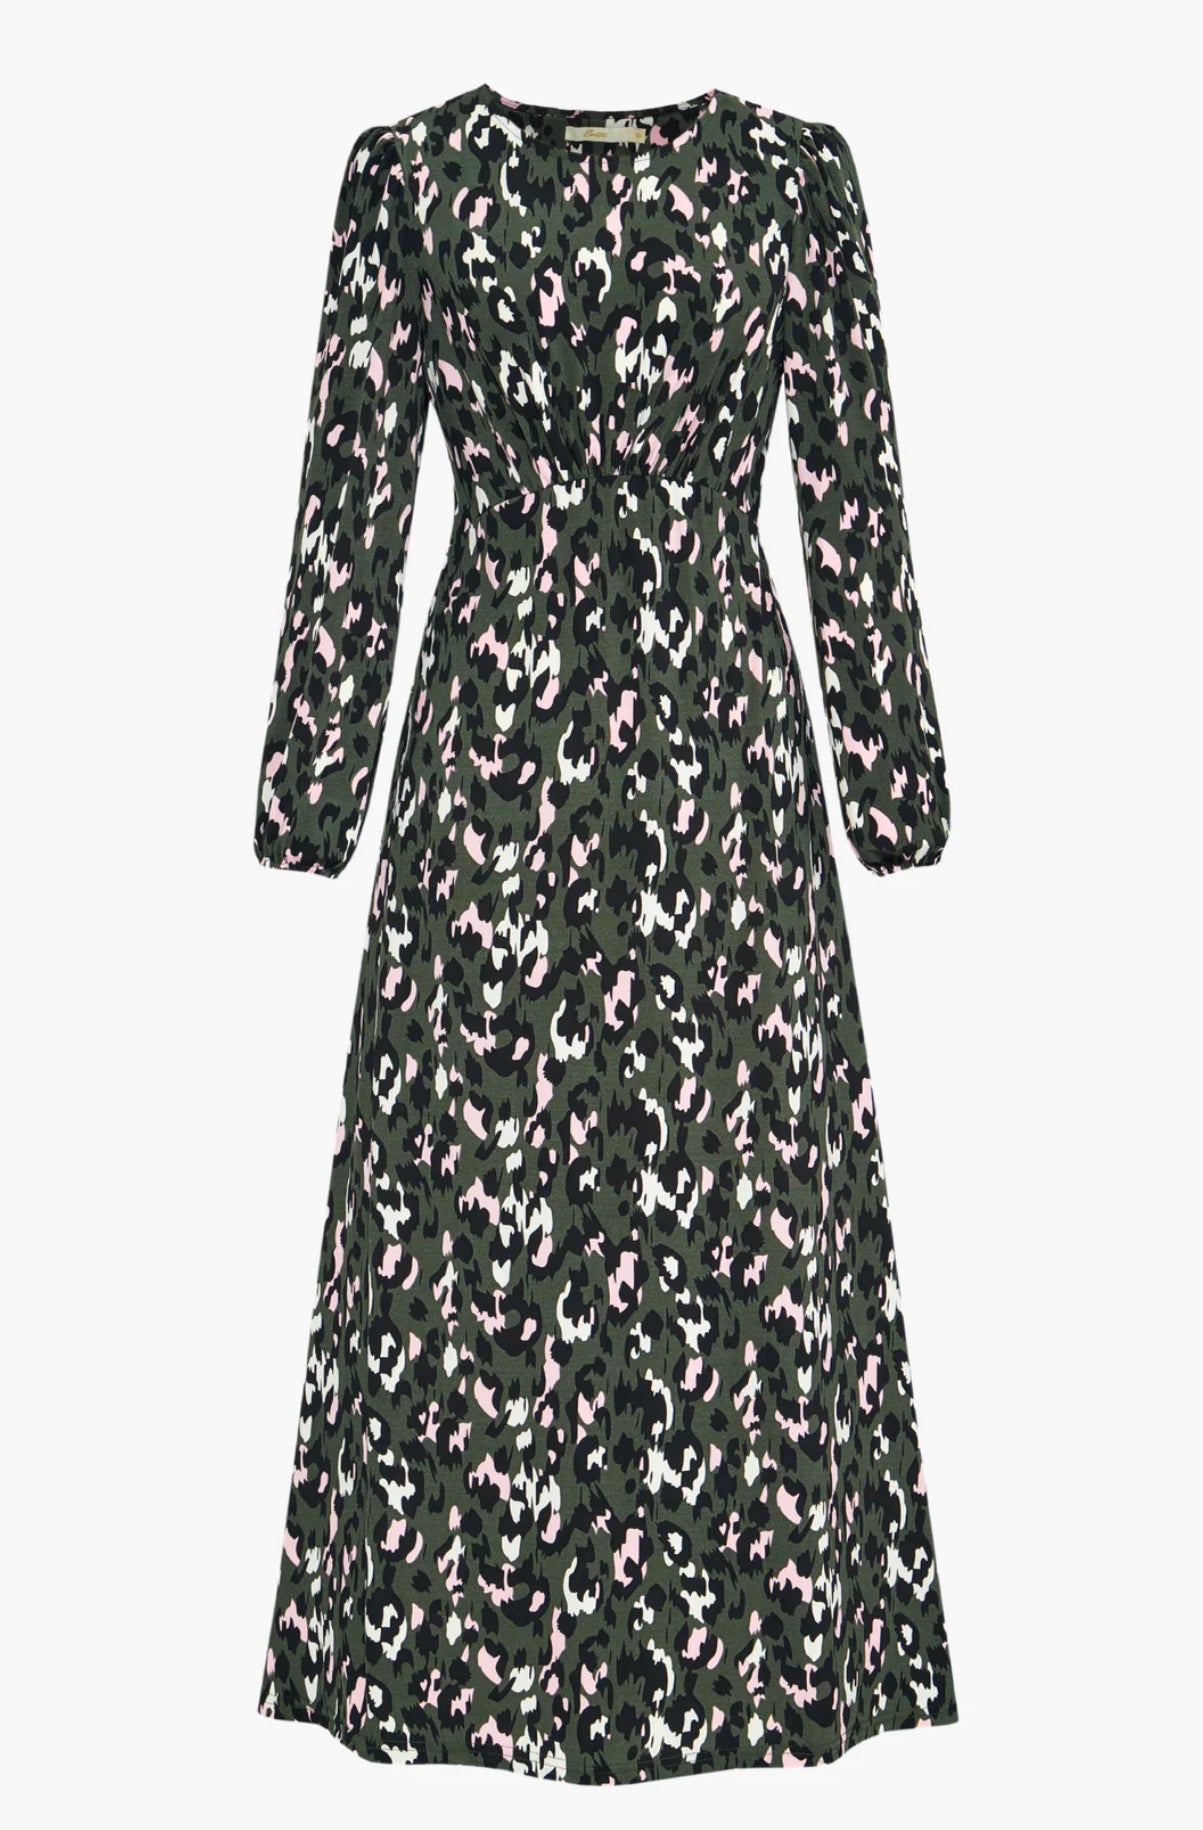 Khaki Leopard Print Tea Dress